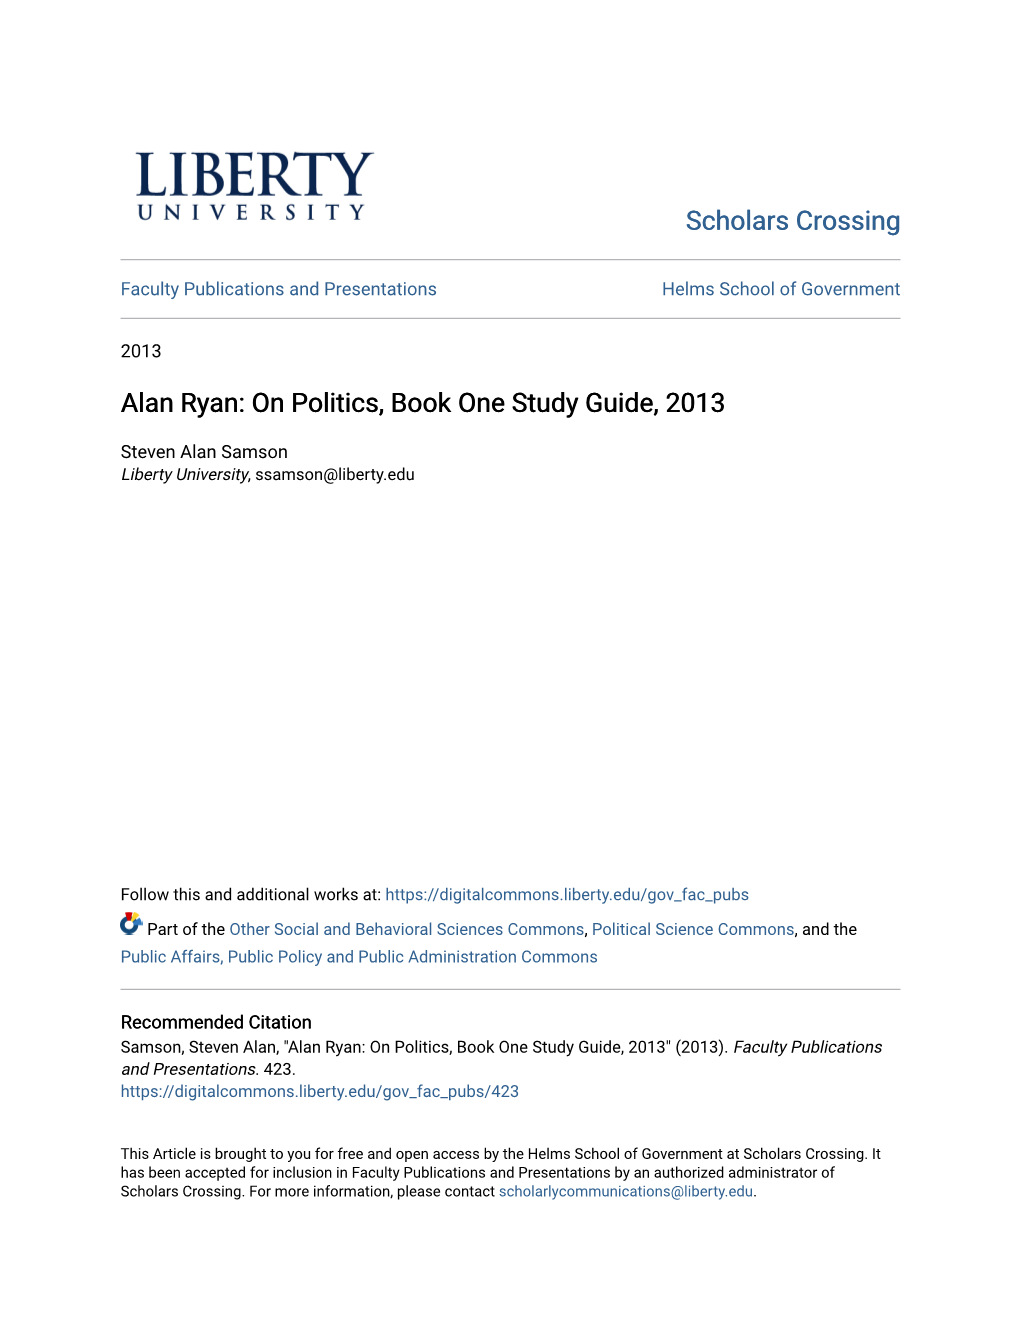 Alan Ryan: on Politics, Book One Study Guide, 2013